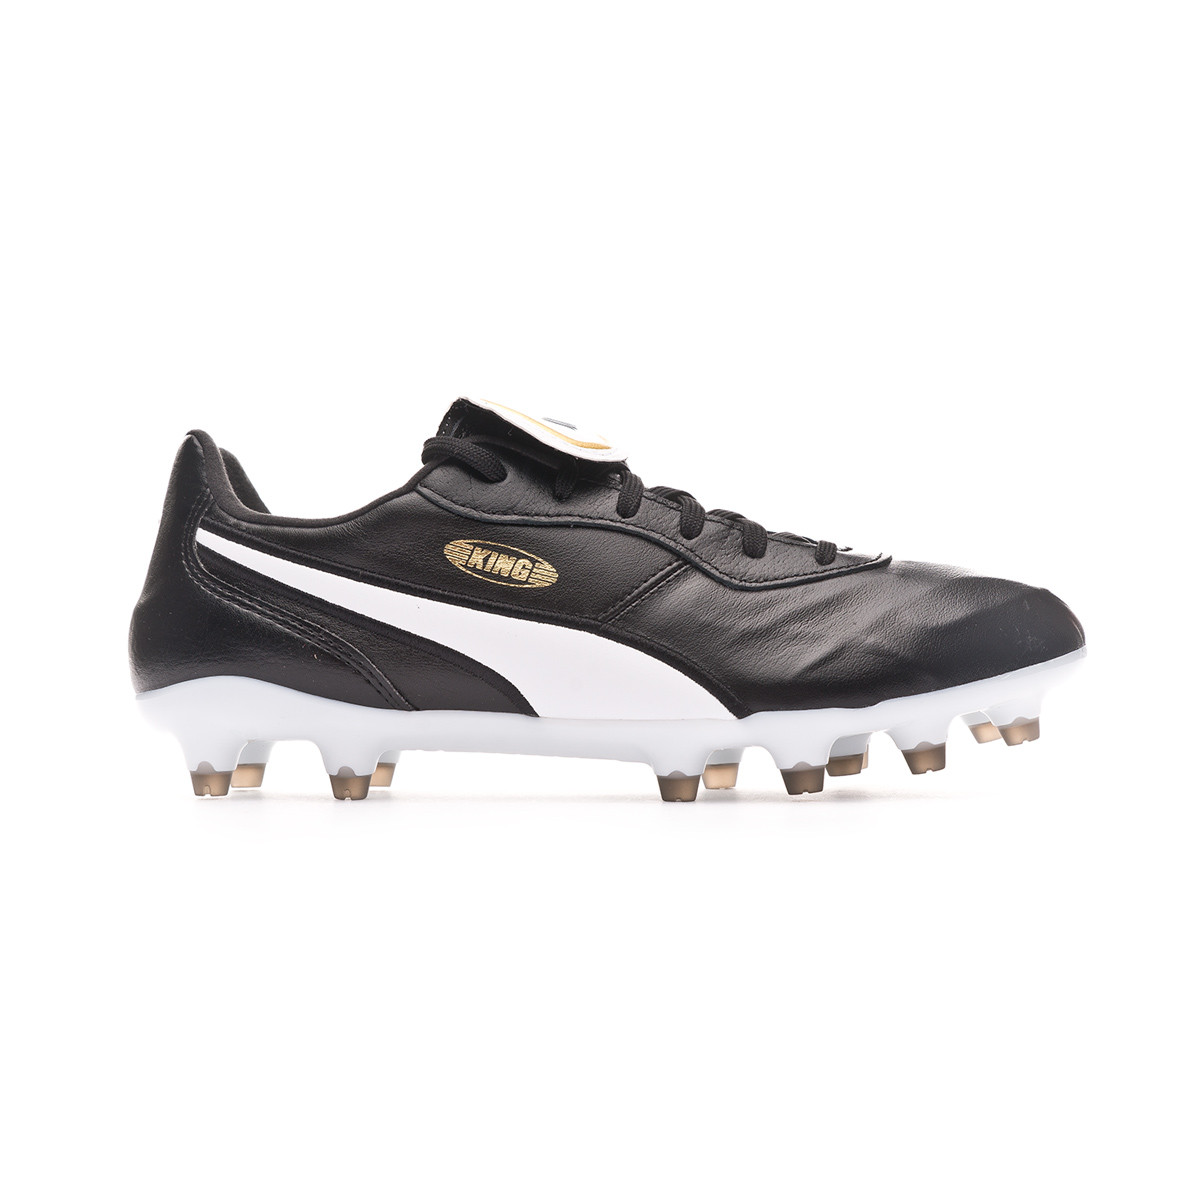 Zapatos de fútbol Puma King Top FG Puma black-Puma white - Tienda de fútbol  Fútbol Emotion